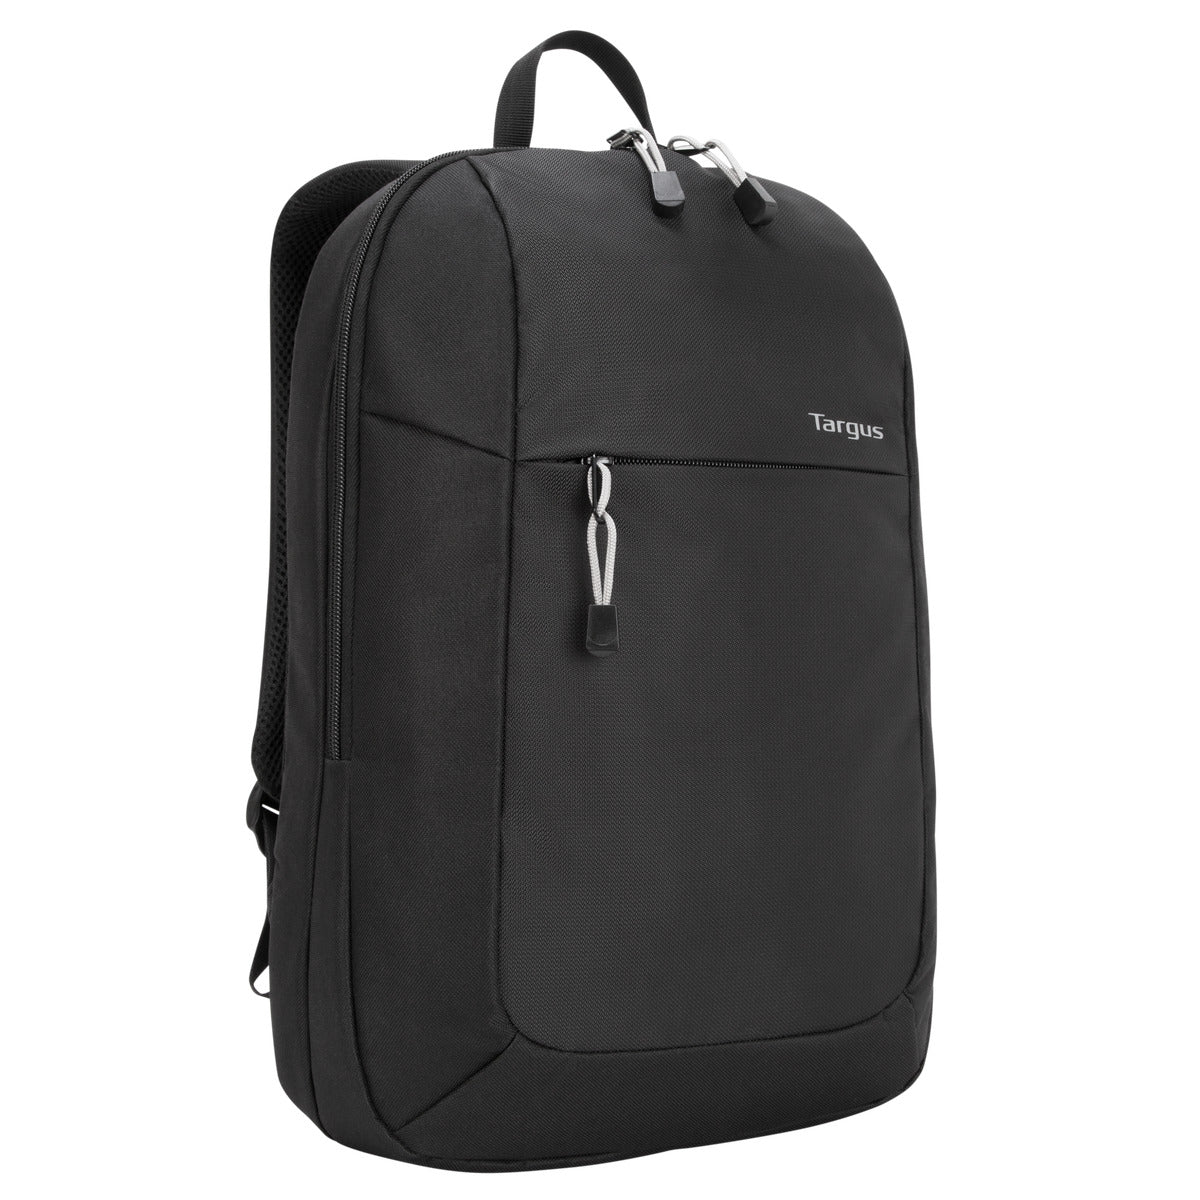 Intellect (Black) Laptop | 15.6-inch Backpack Advanced Targus